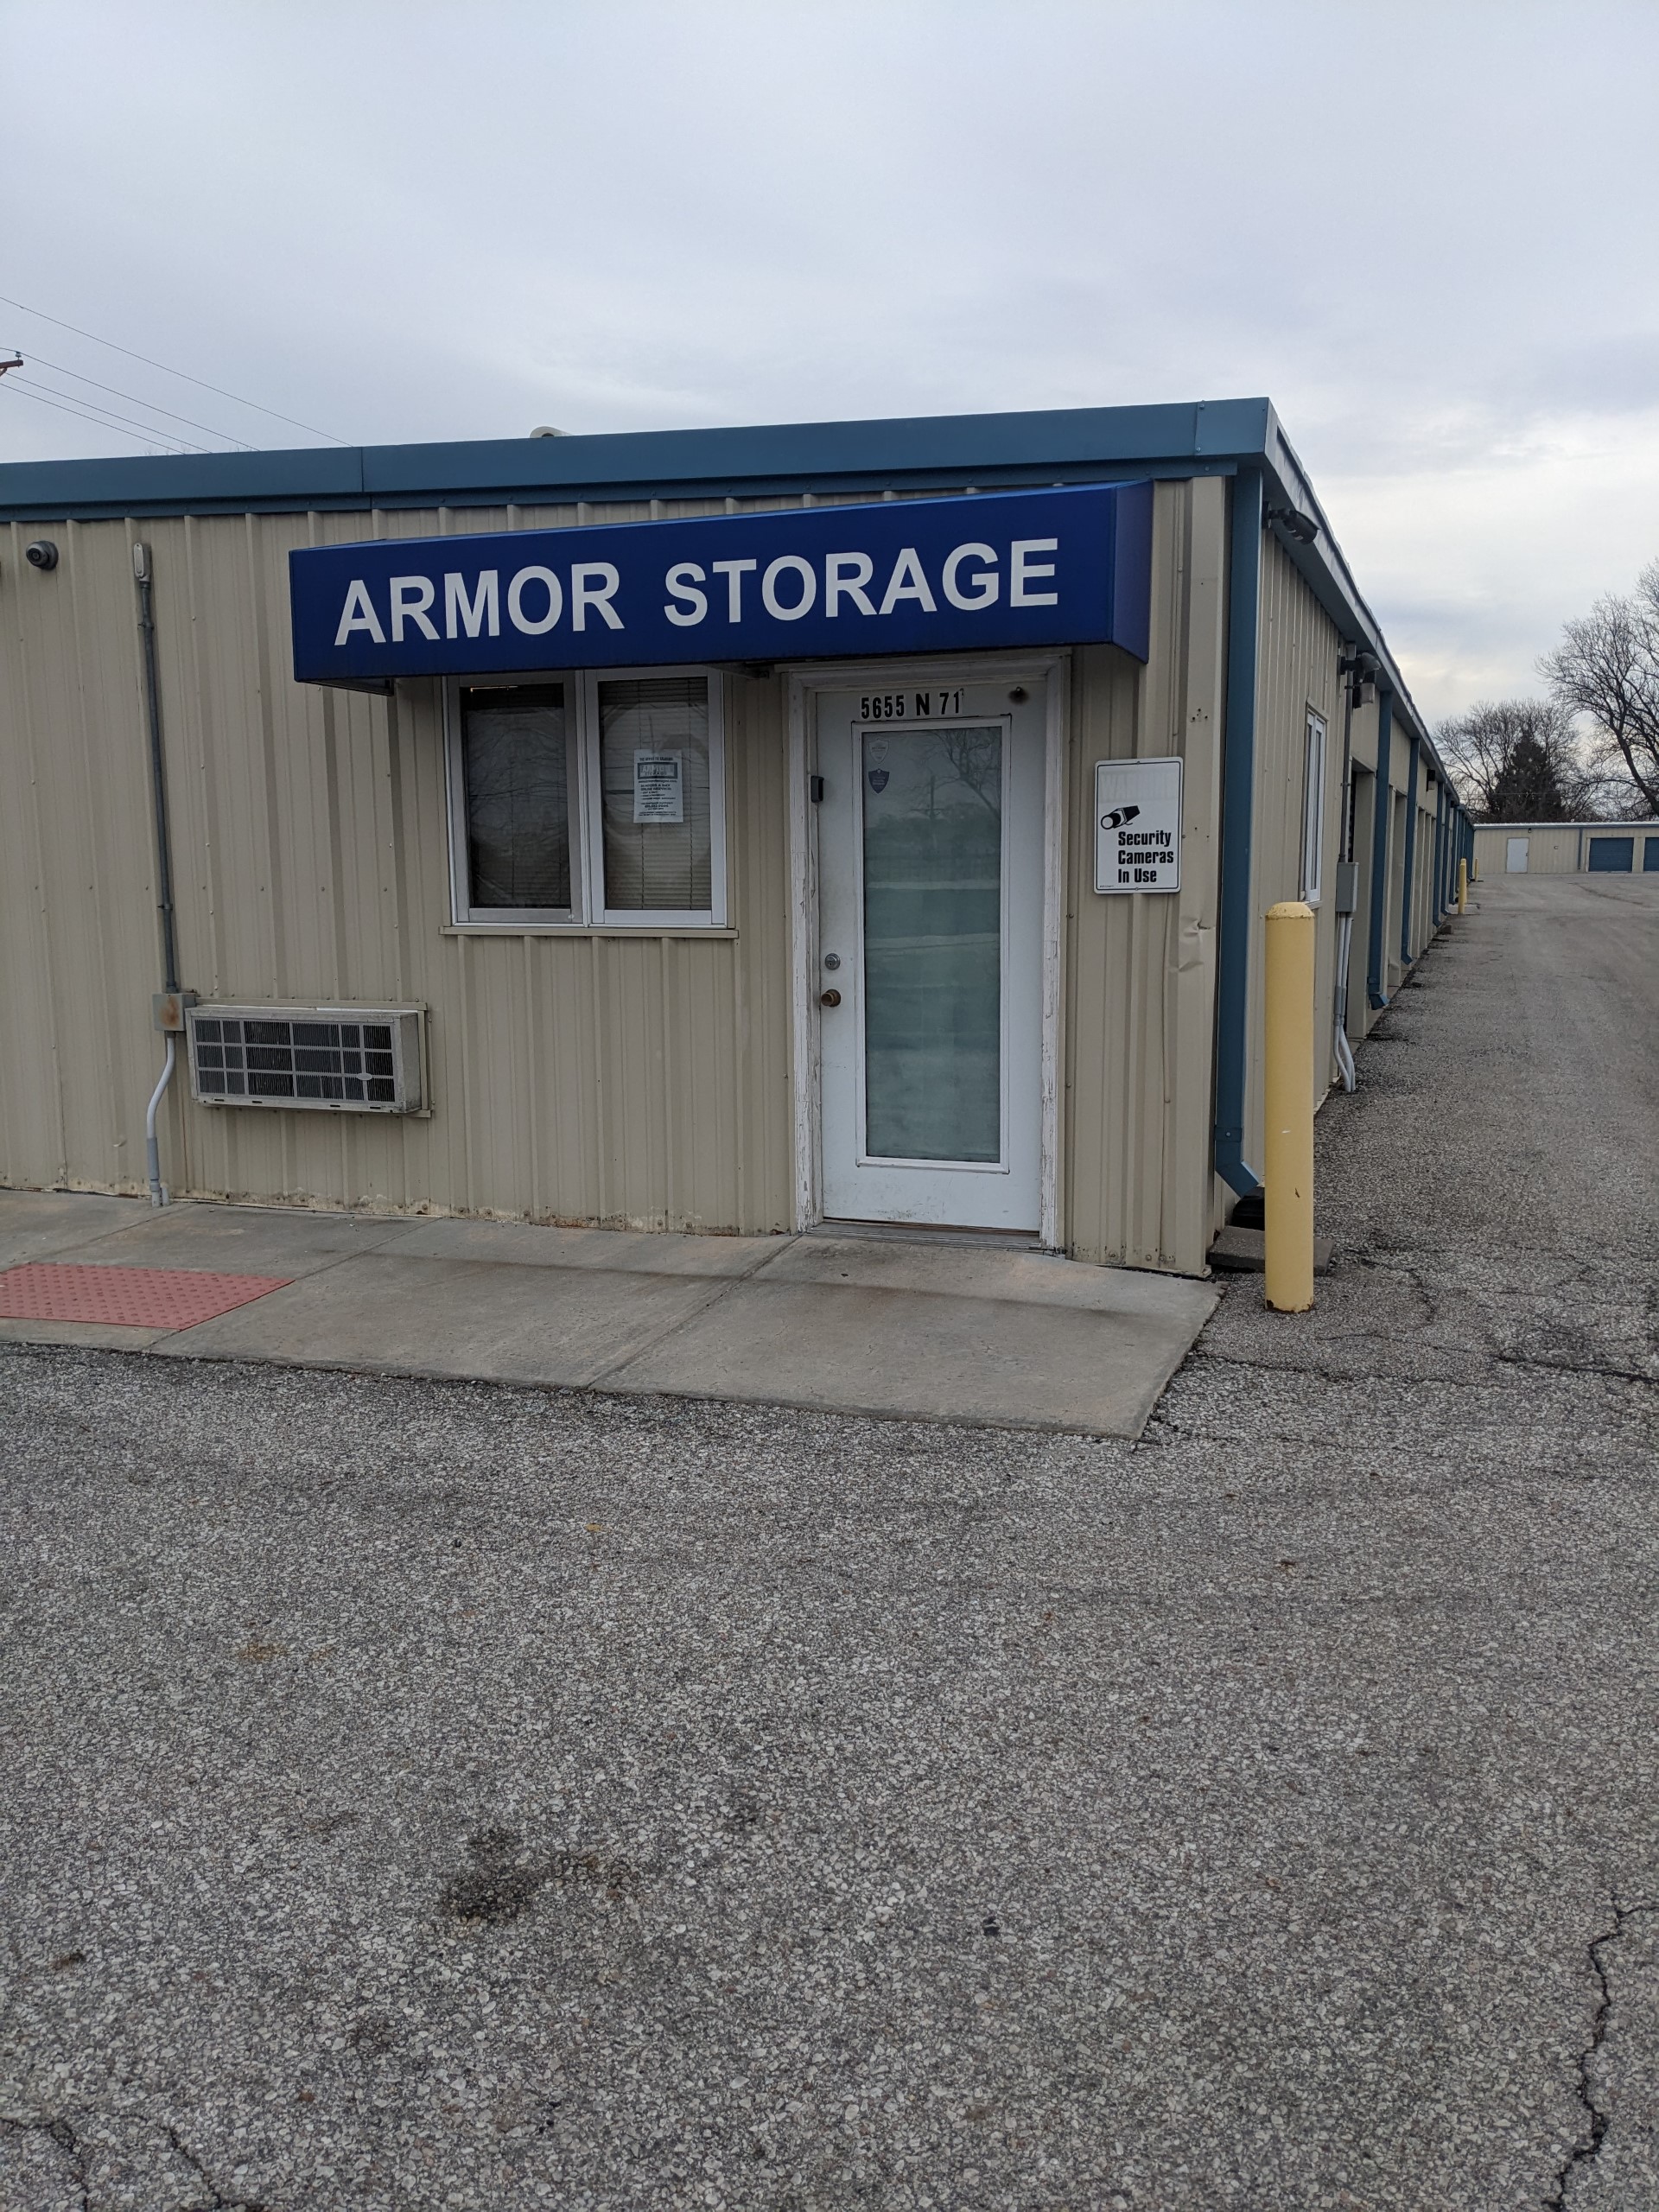 Armor Storage Sign in Omaha, NE